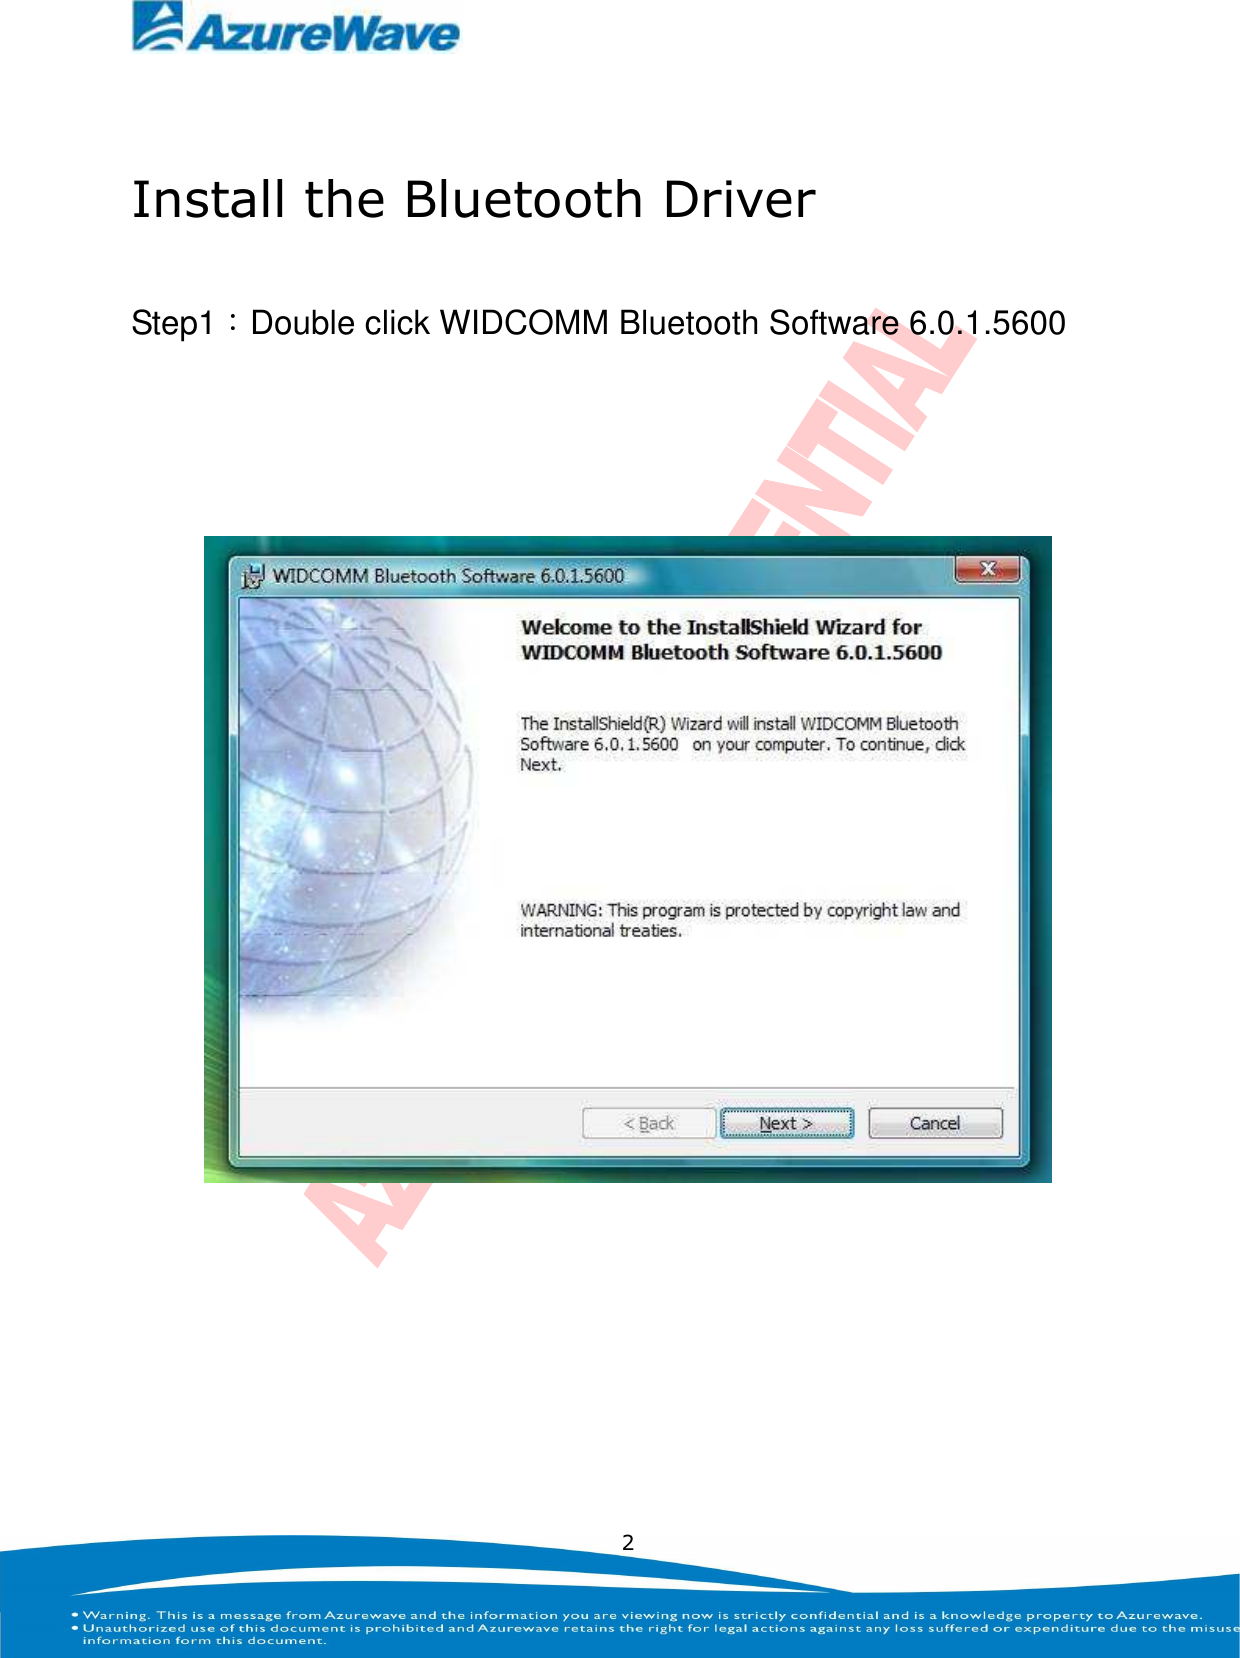 Download widcomm bluetooth software windows 7 64 bit